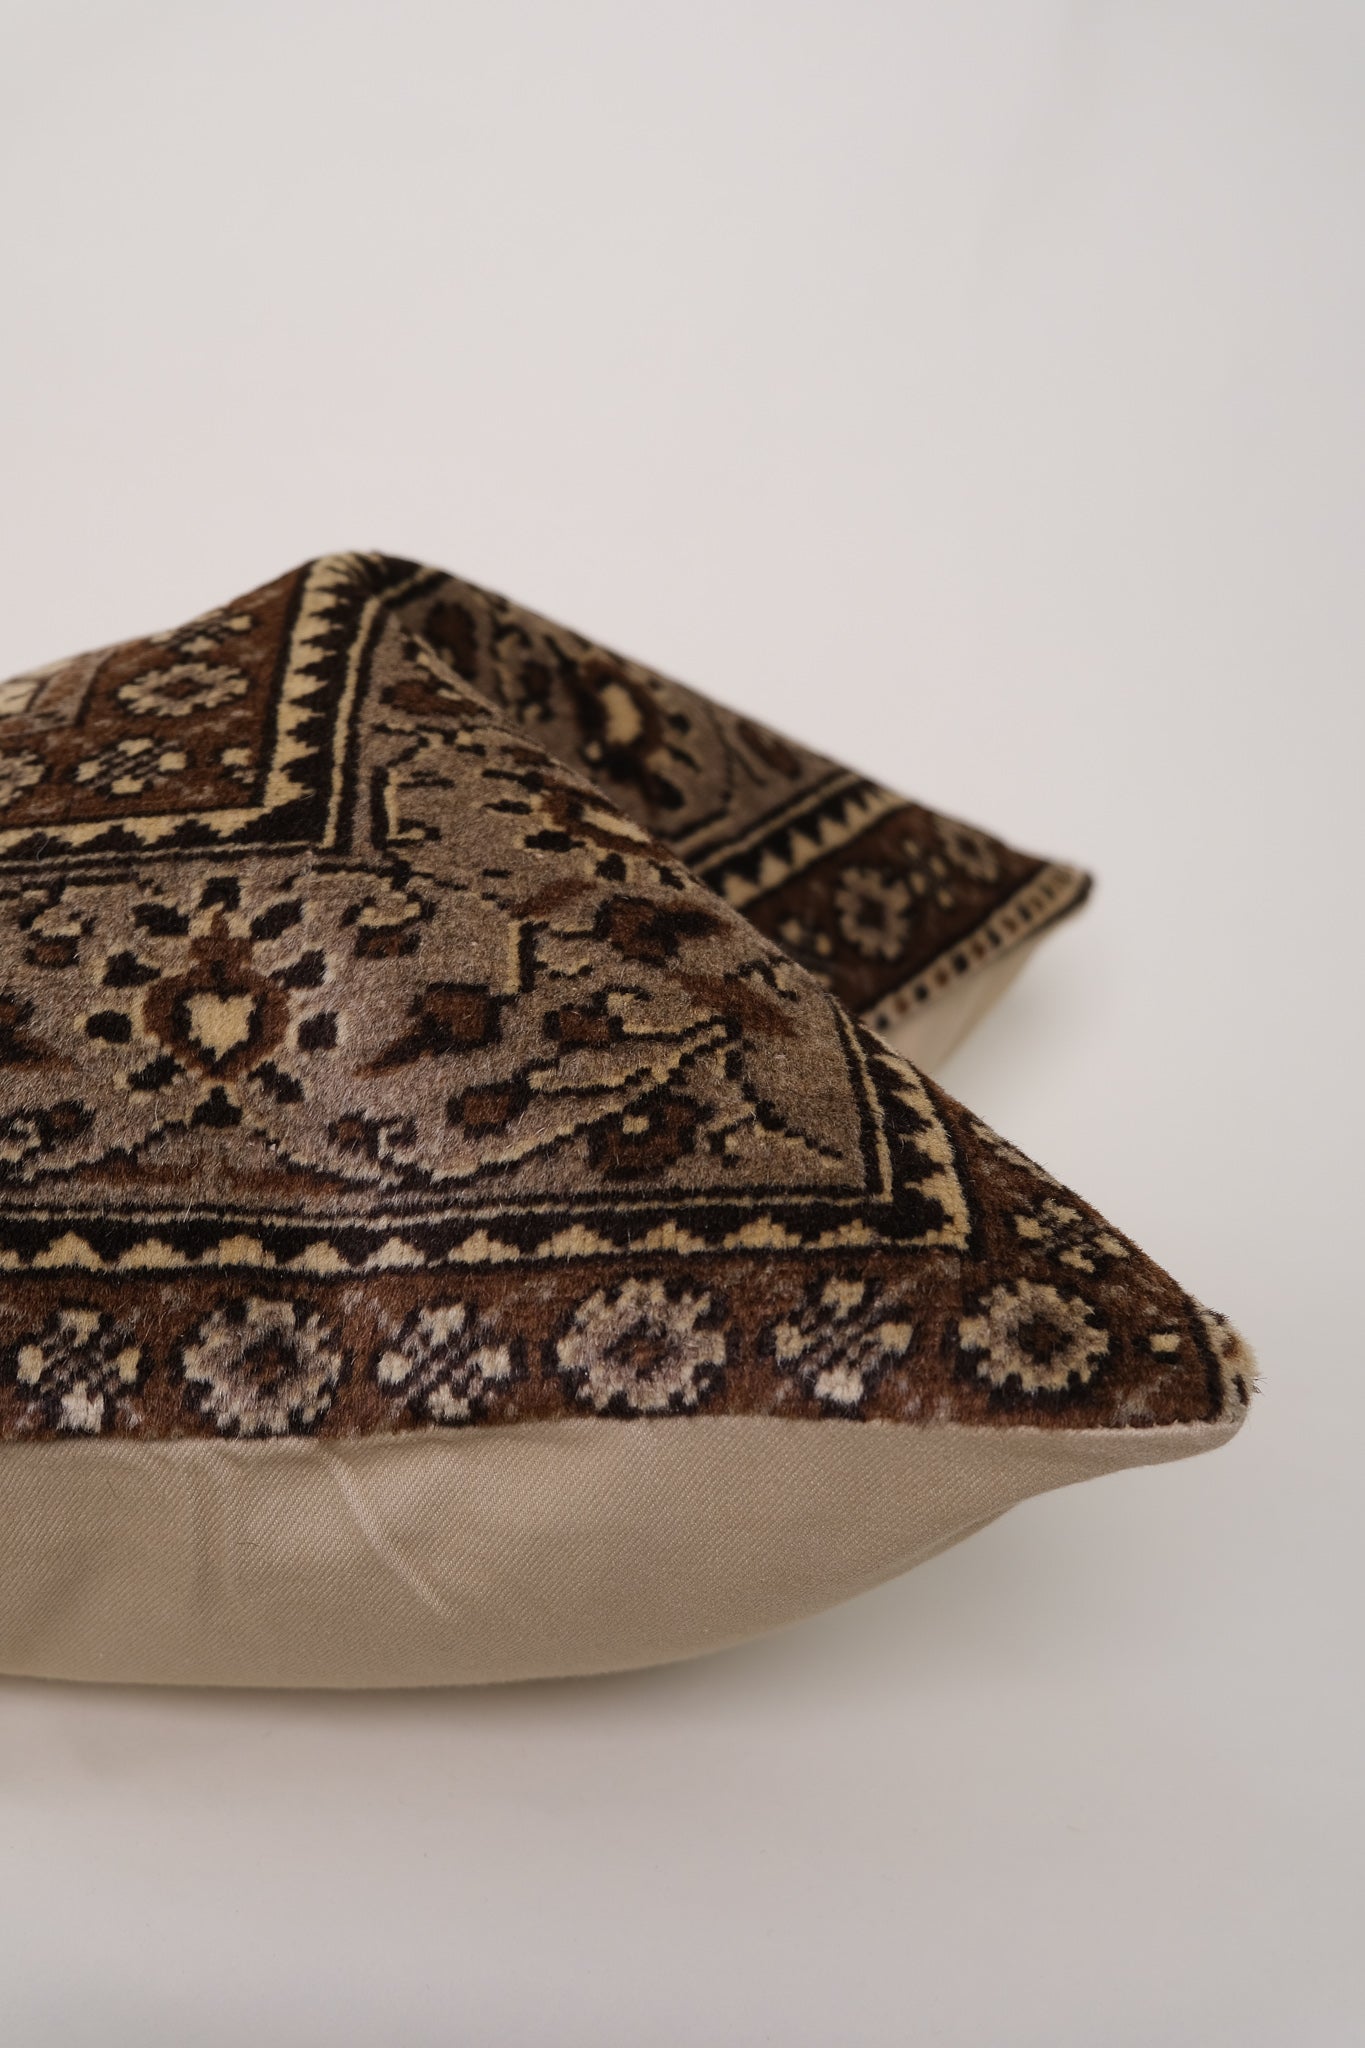 Omar Turkish Vintage Rug Pillow No.1